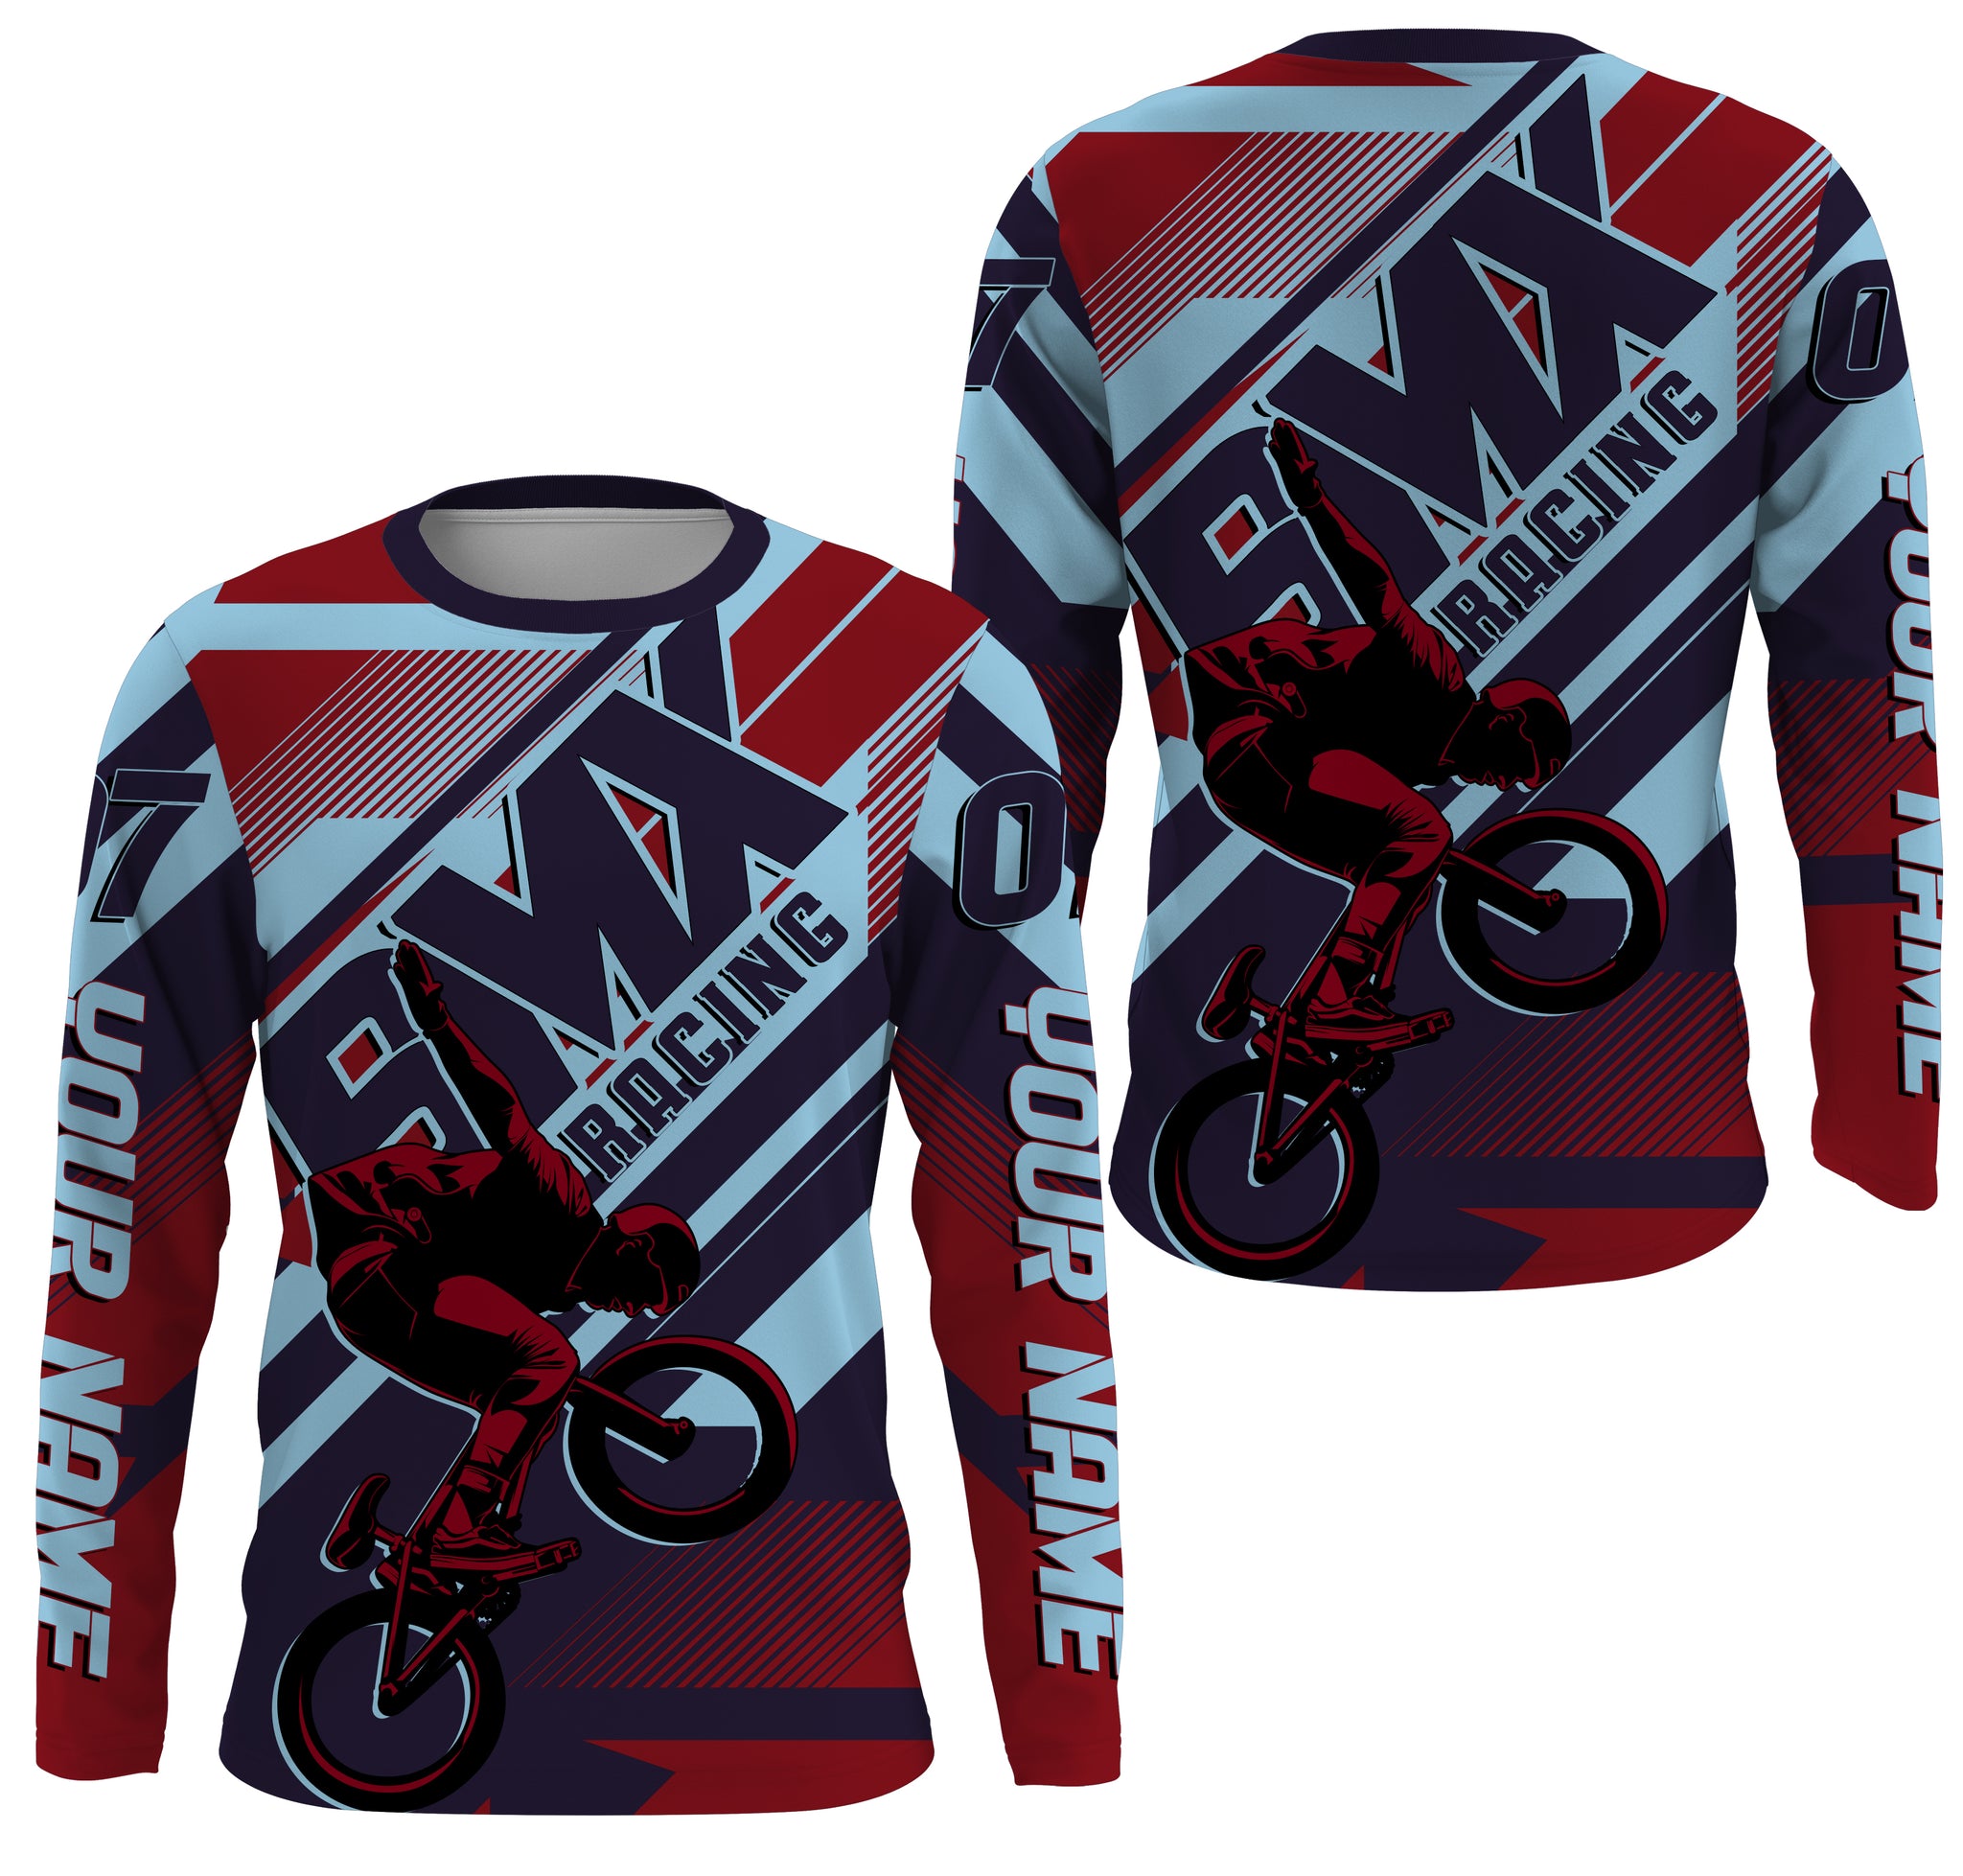 BMX racing jersey Personalized UPF30+ Stunt riding shirts Off-road Cycling adult&kid racewear| SLC38